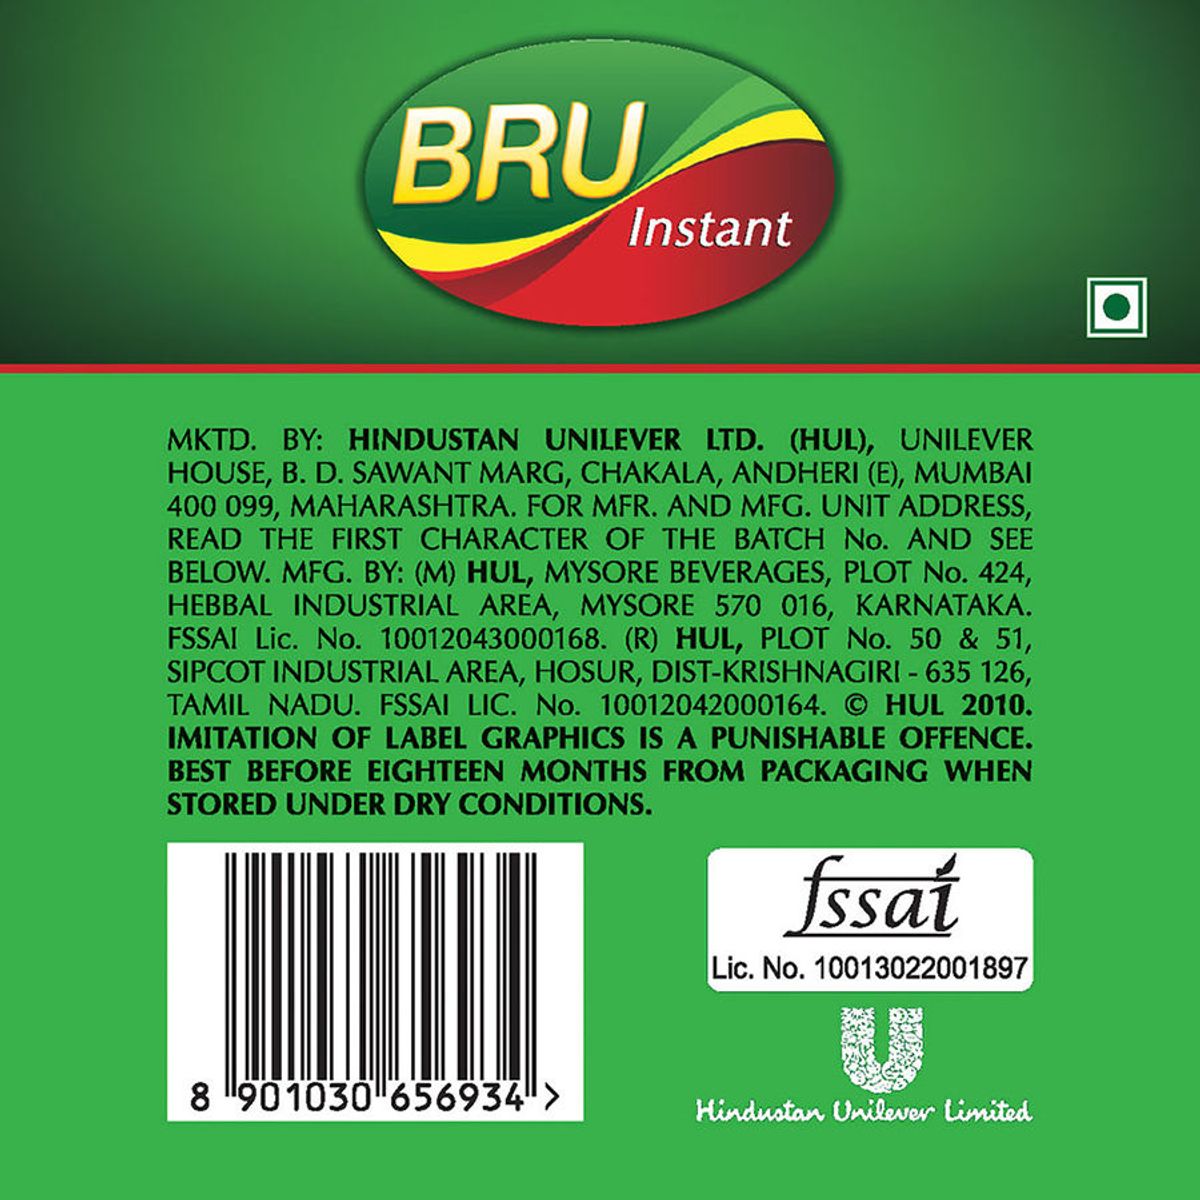 Bru Instant Coffee Image